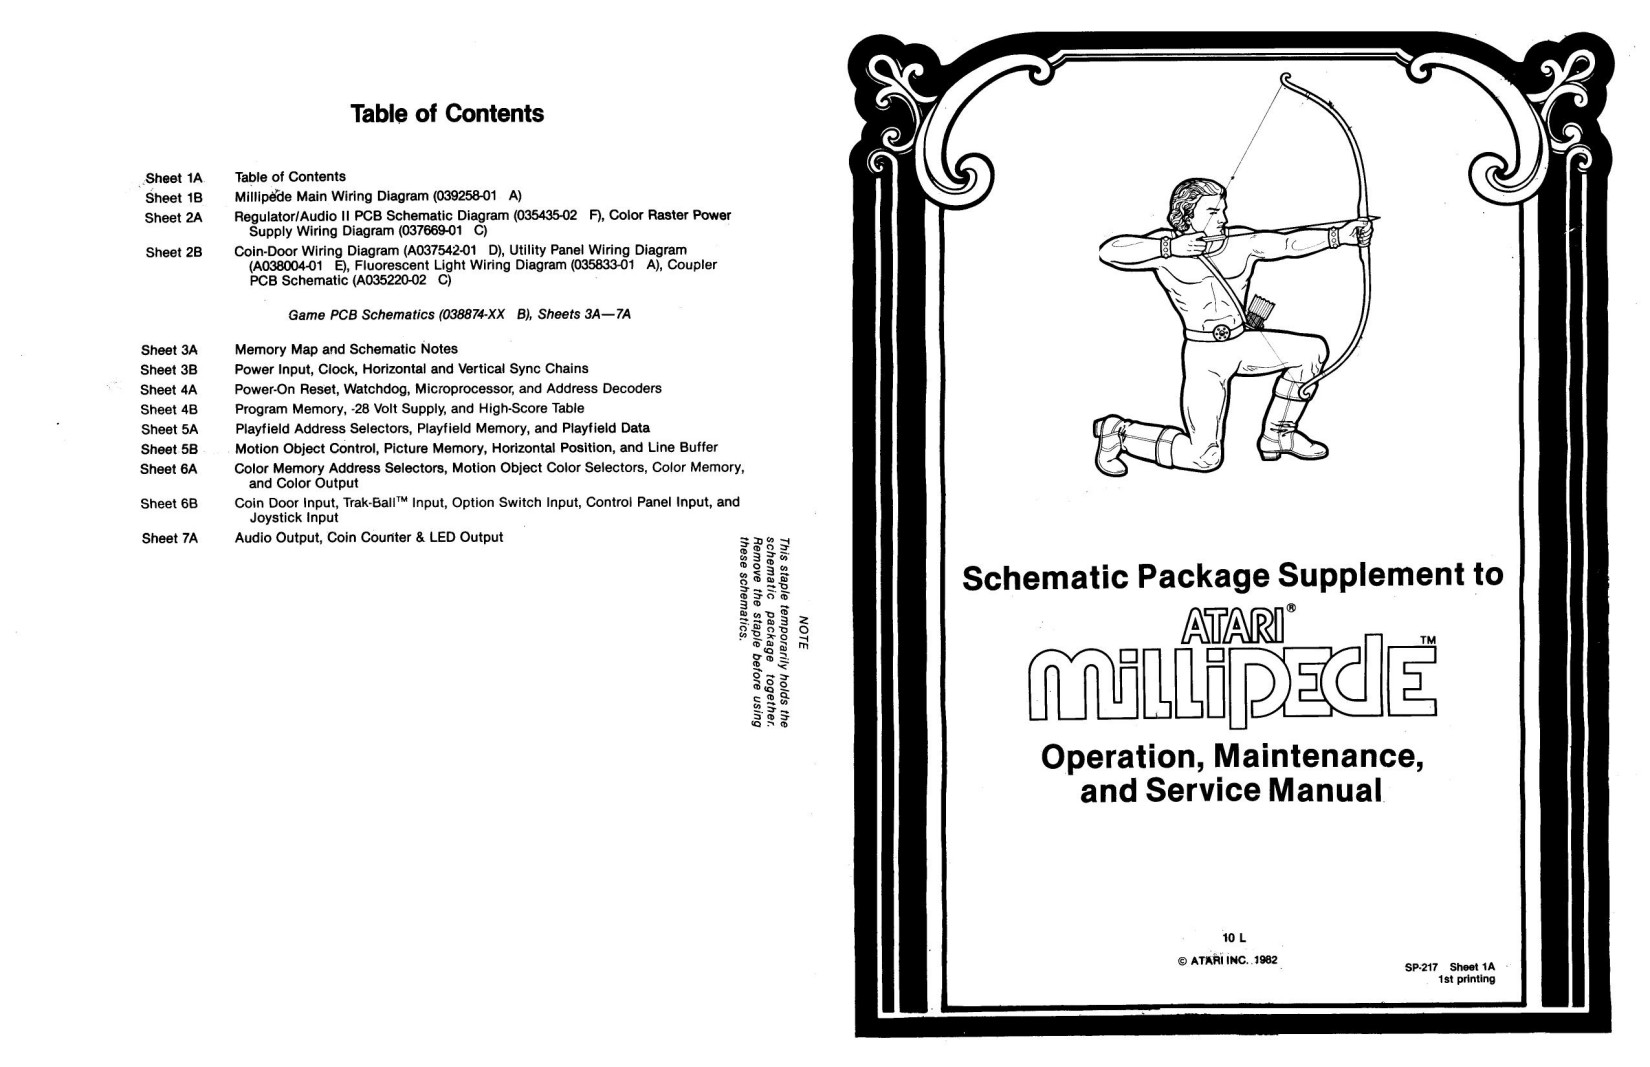 Millipede (SP-217 1st Printing) (Schematic Package) (U)